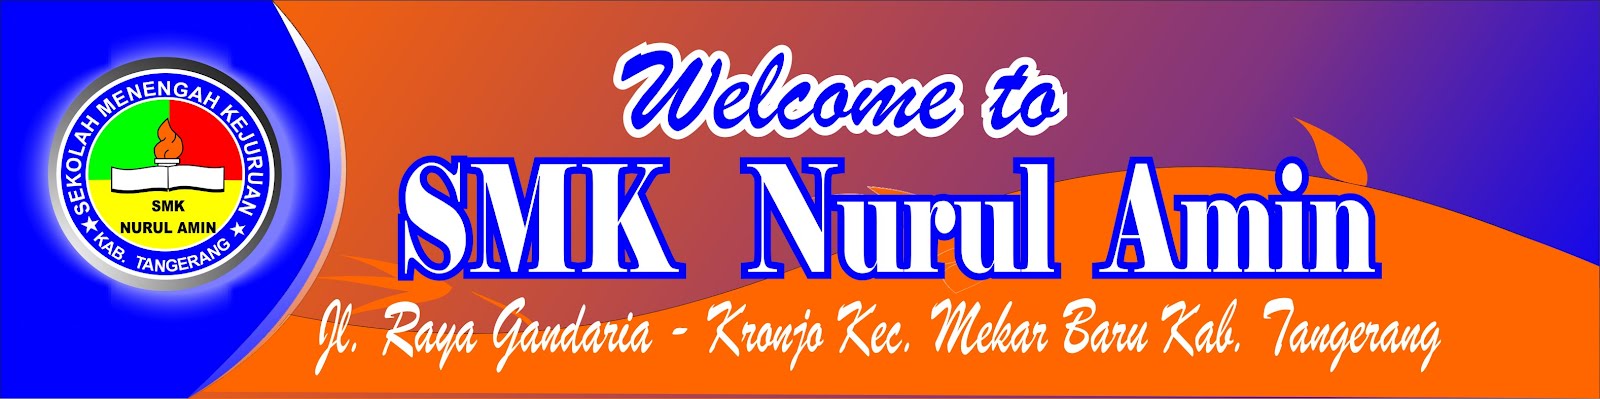 SMK Nurul Amin Kab. Tangerang